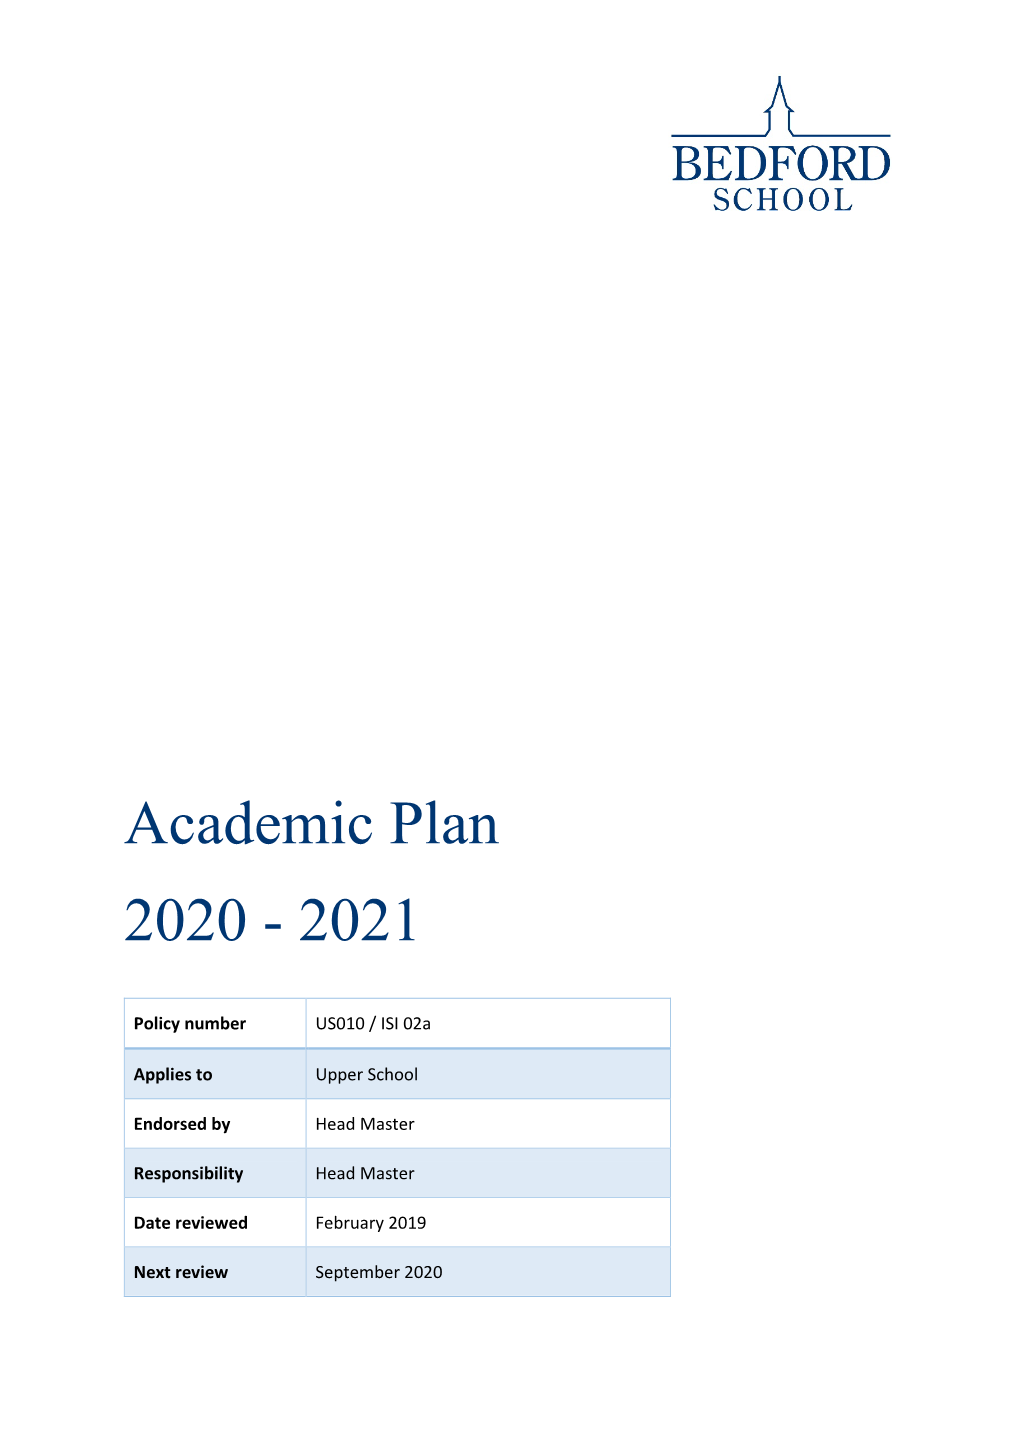 Academic Plan 2020 - 2021